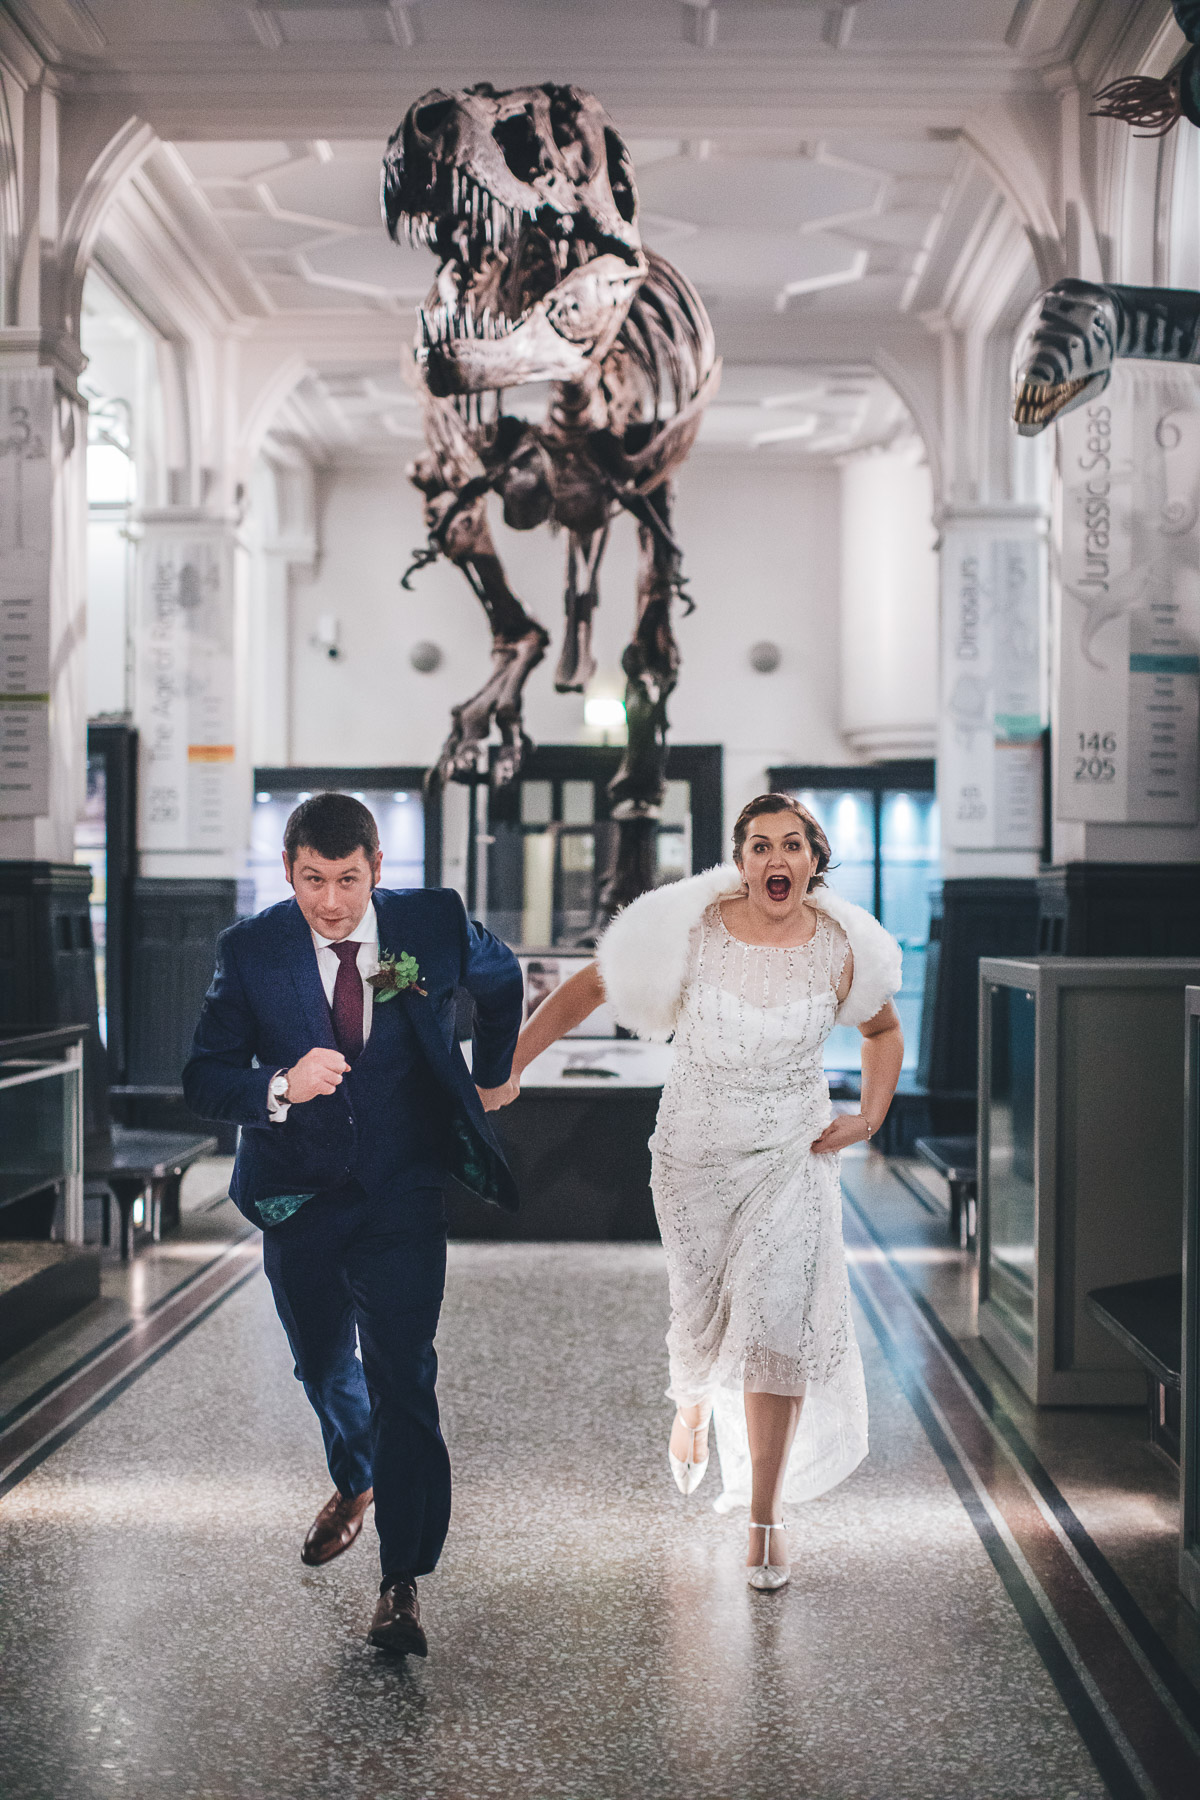 Bride and groom running away from a dinosaur skeleton